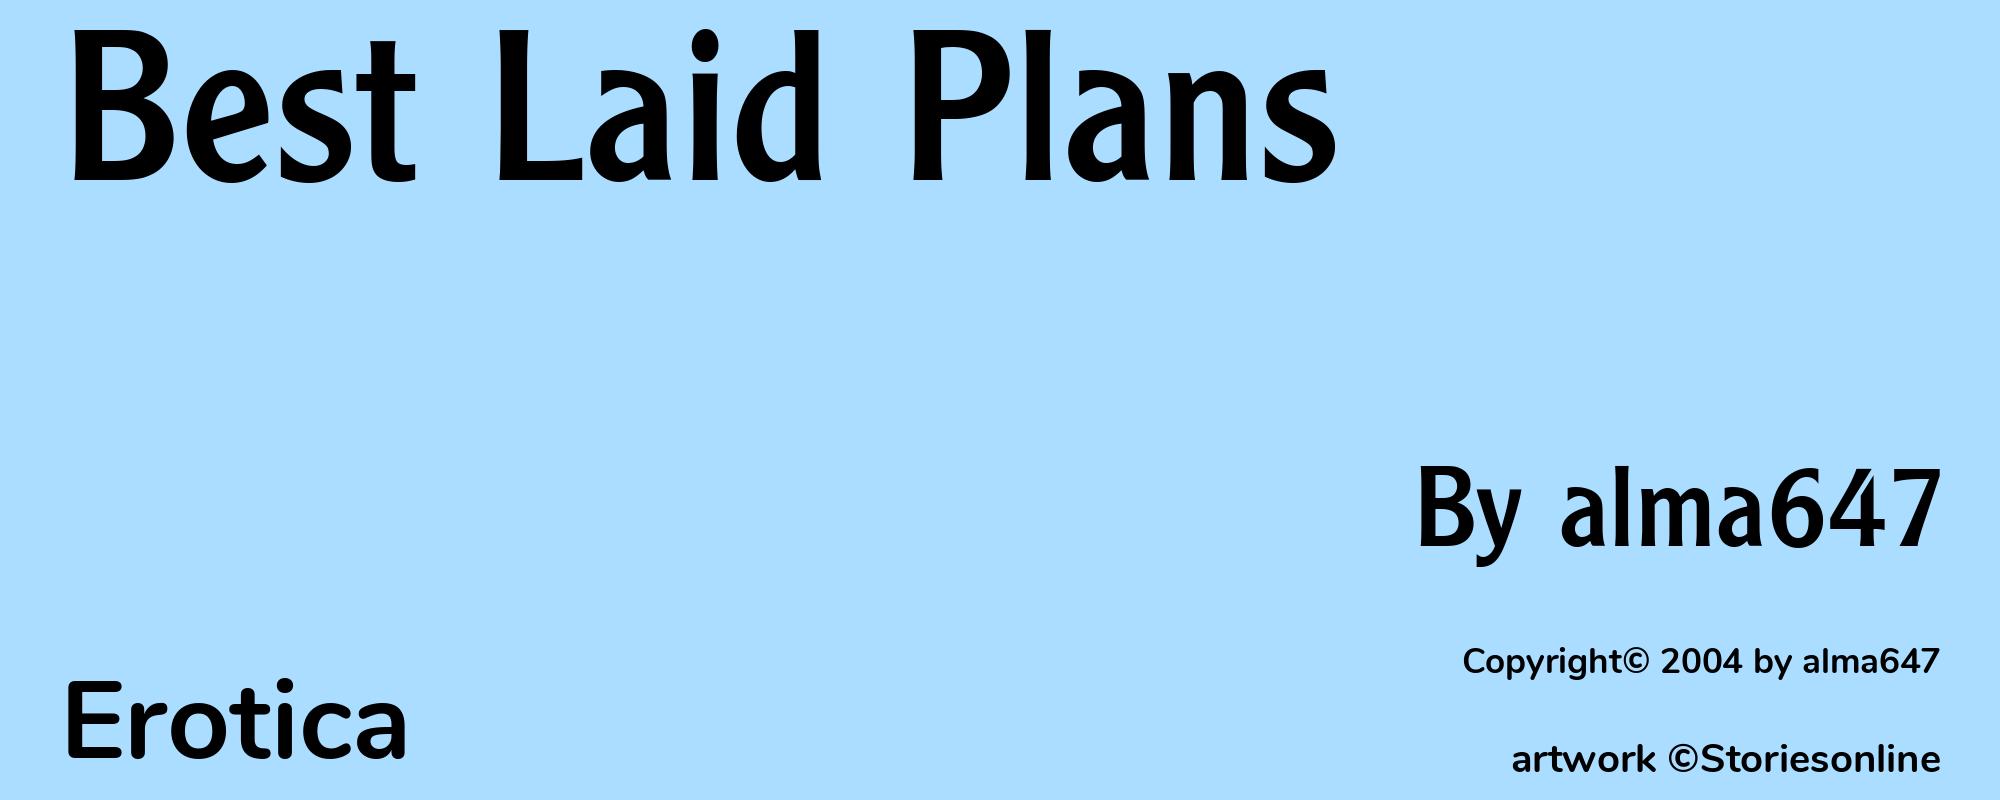 Best Laid Plans - Cover